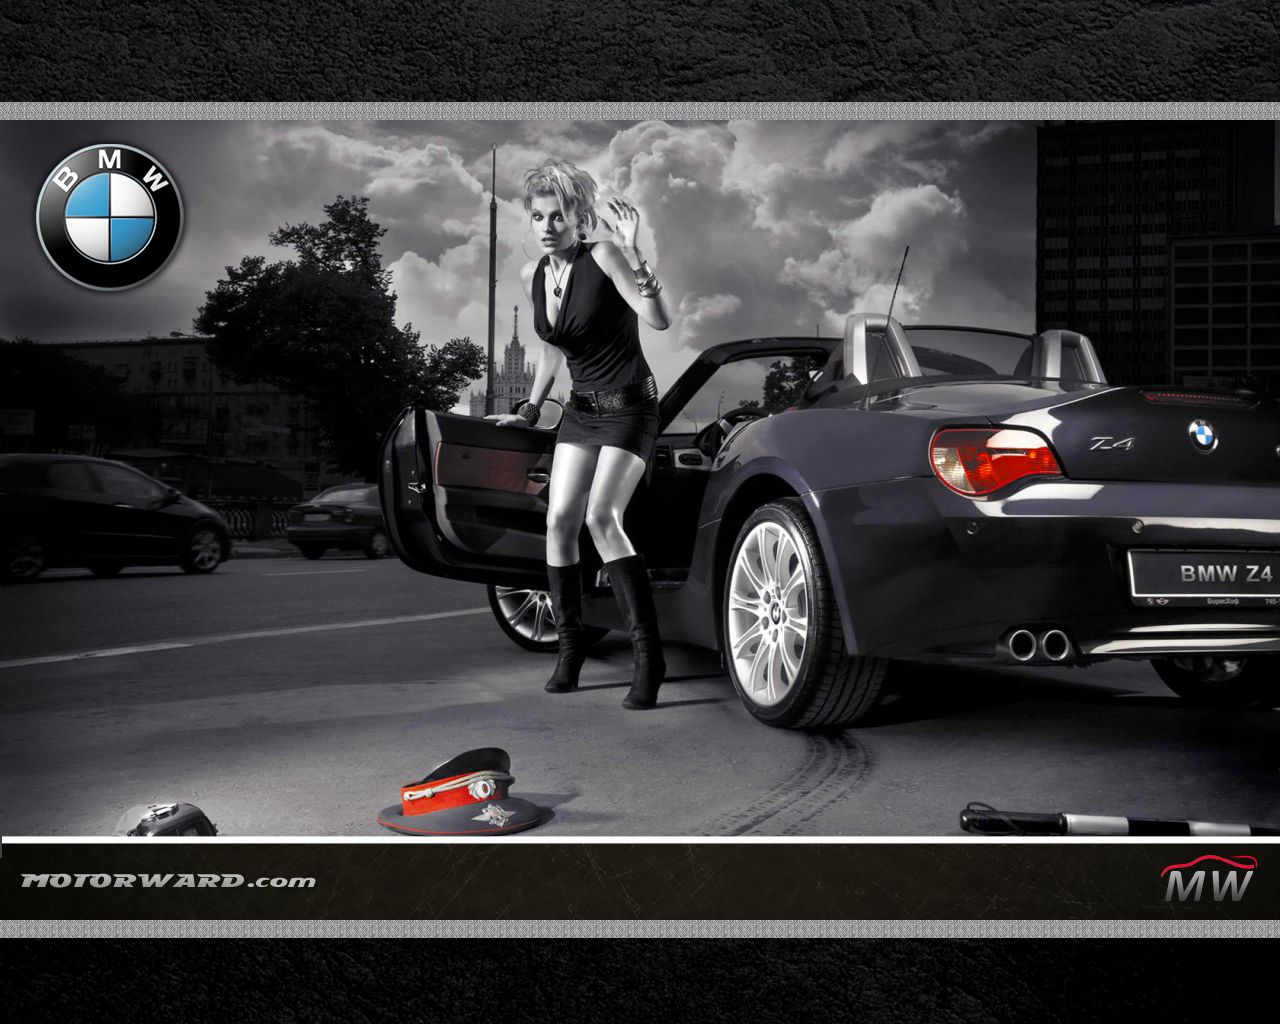 Car Brands HD Wallpaper Motorwardmotorward.com